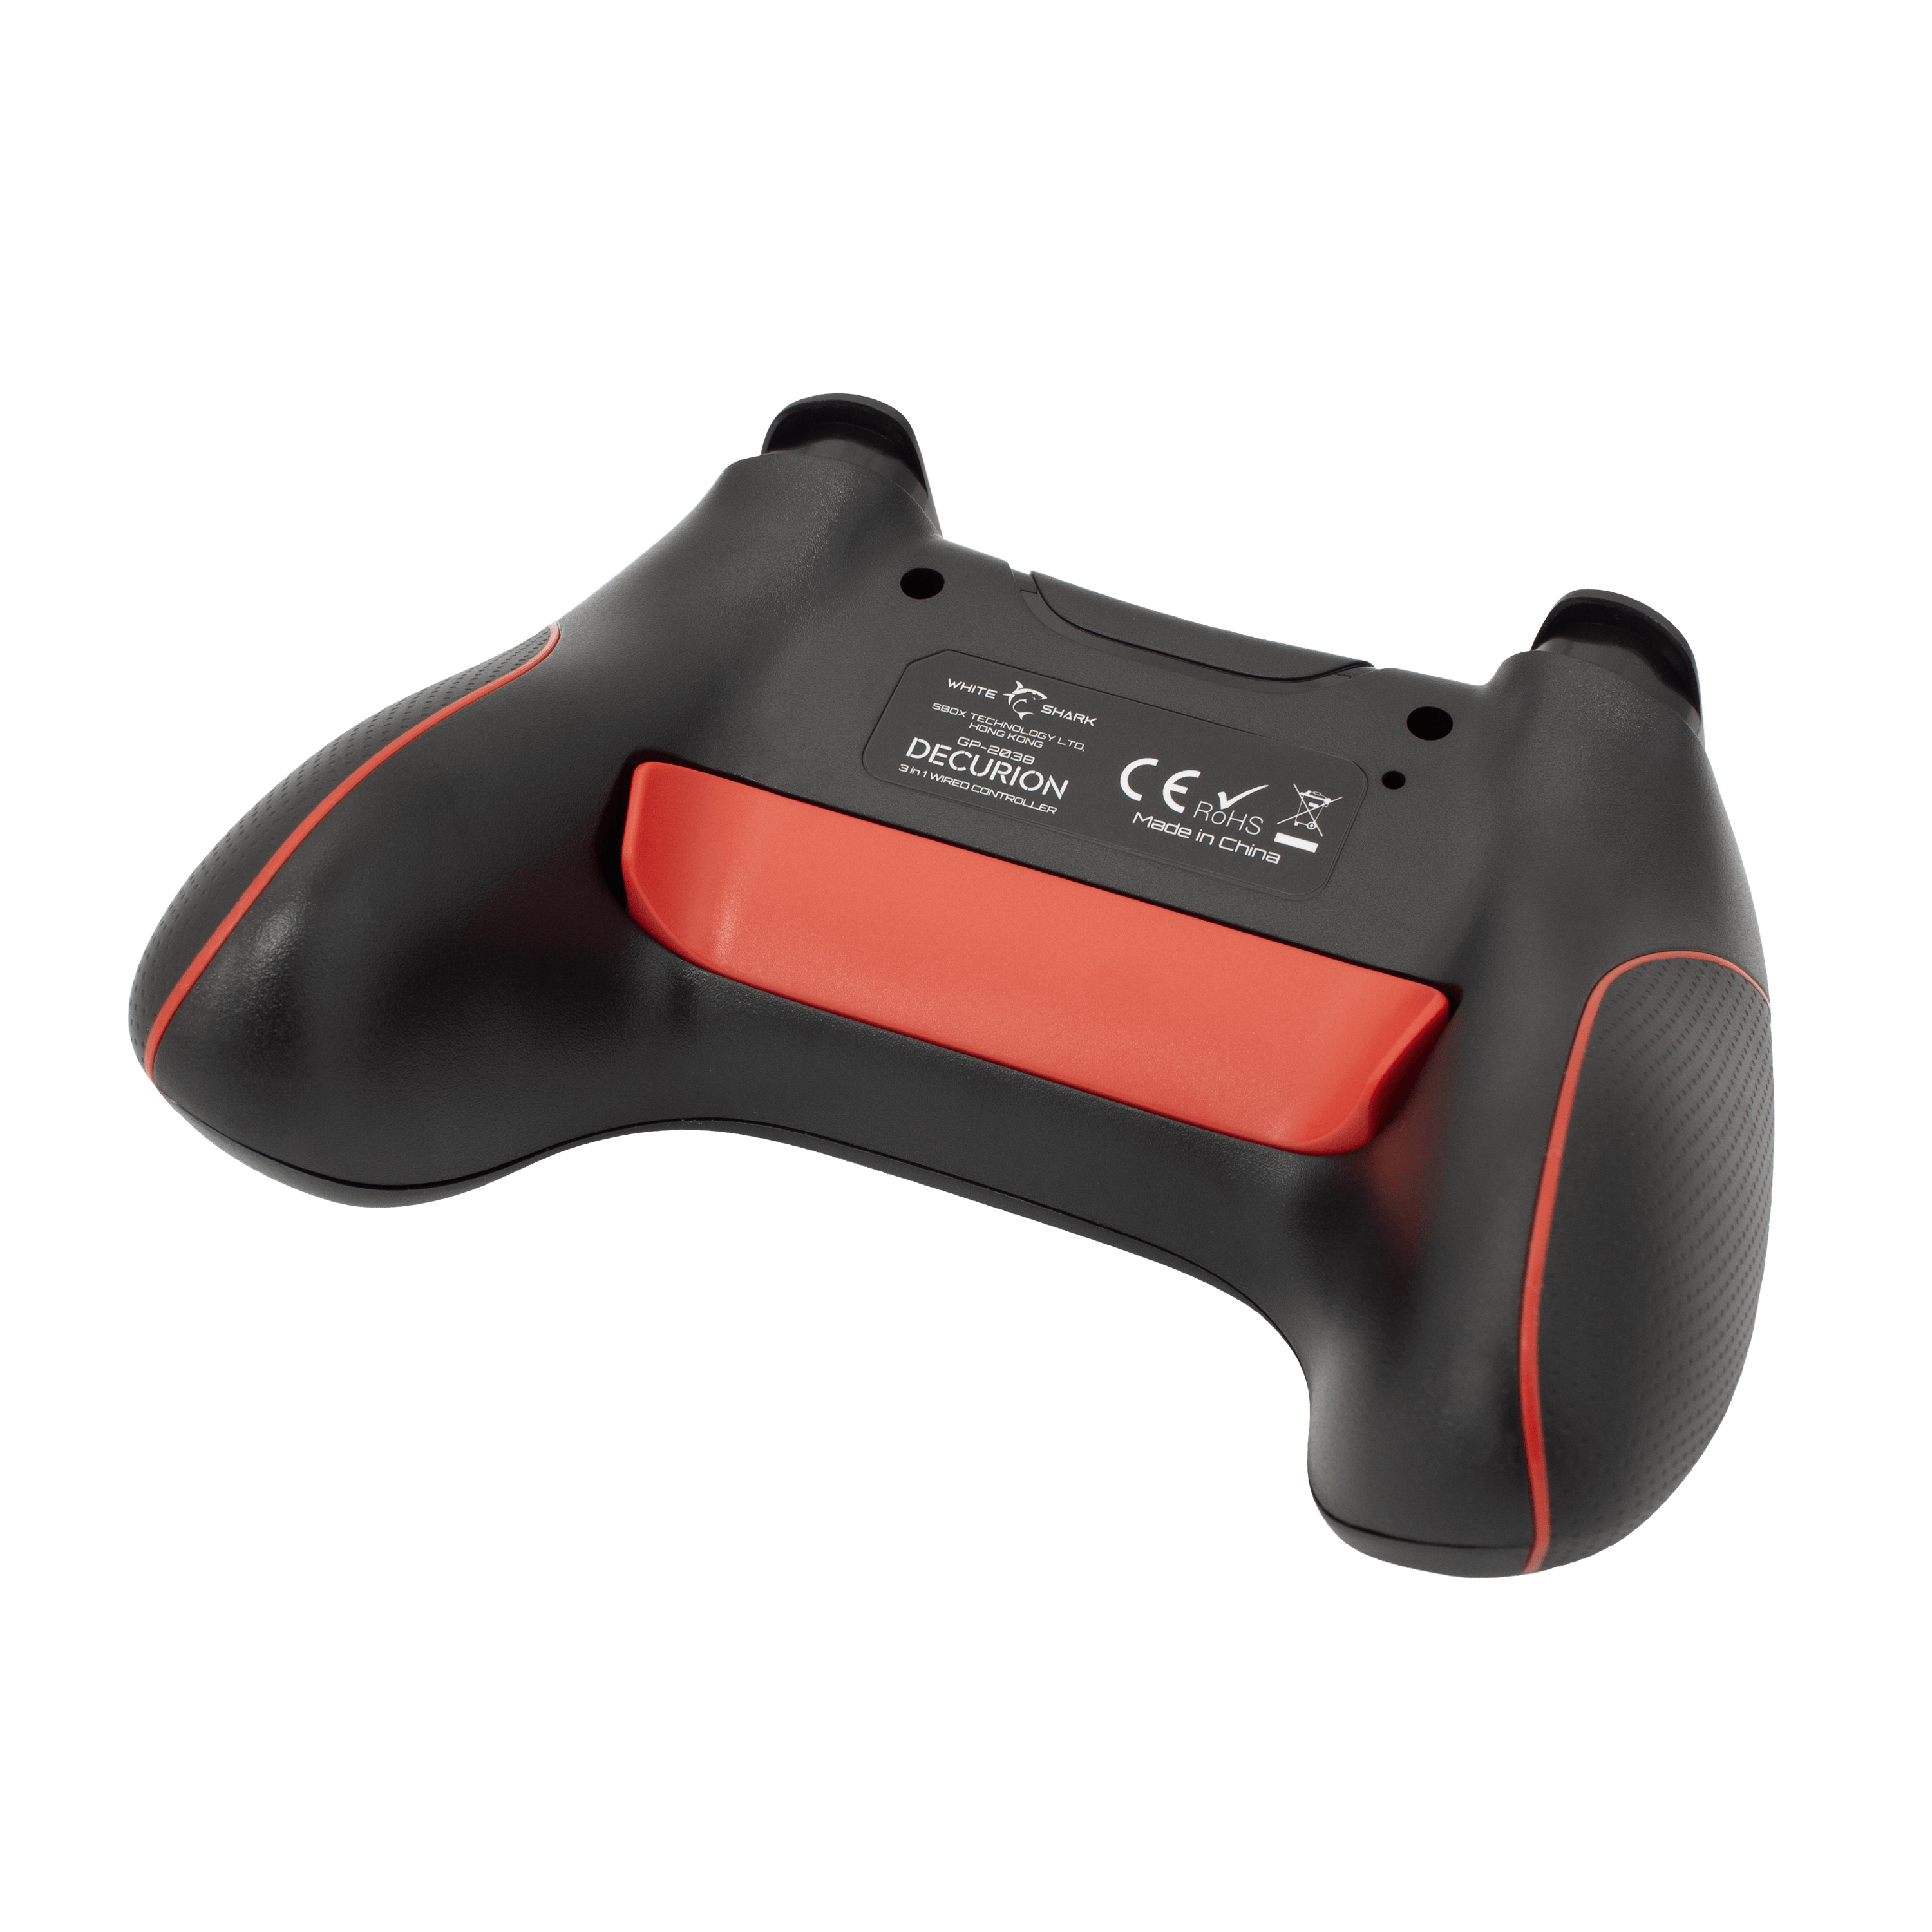 White Shark Decurion Gamepad Controller (USB) - GameStore.mt | Powered by Flutisat